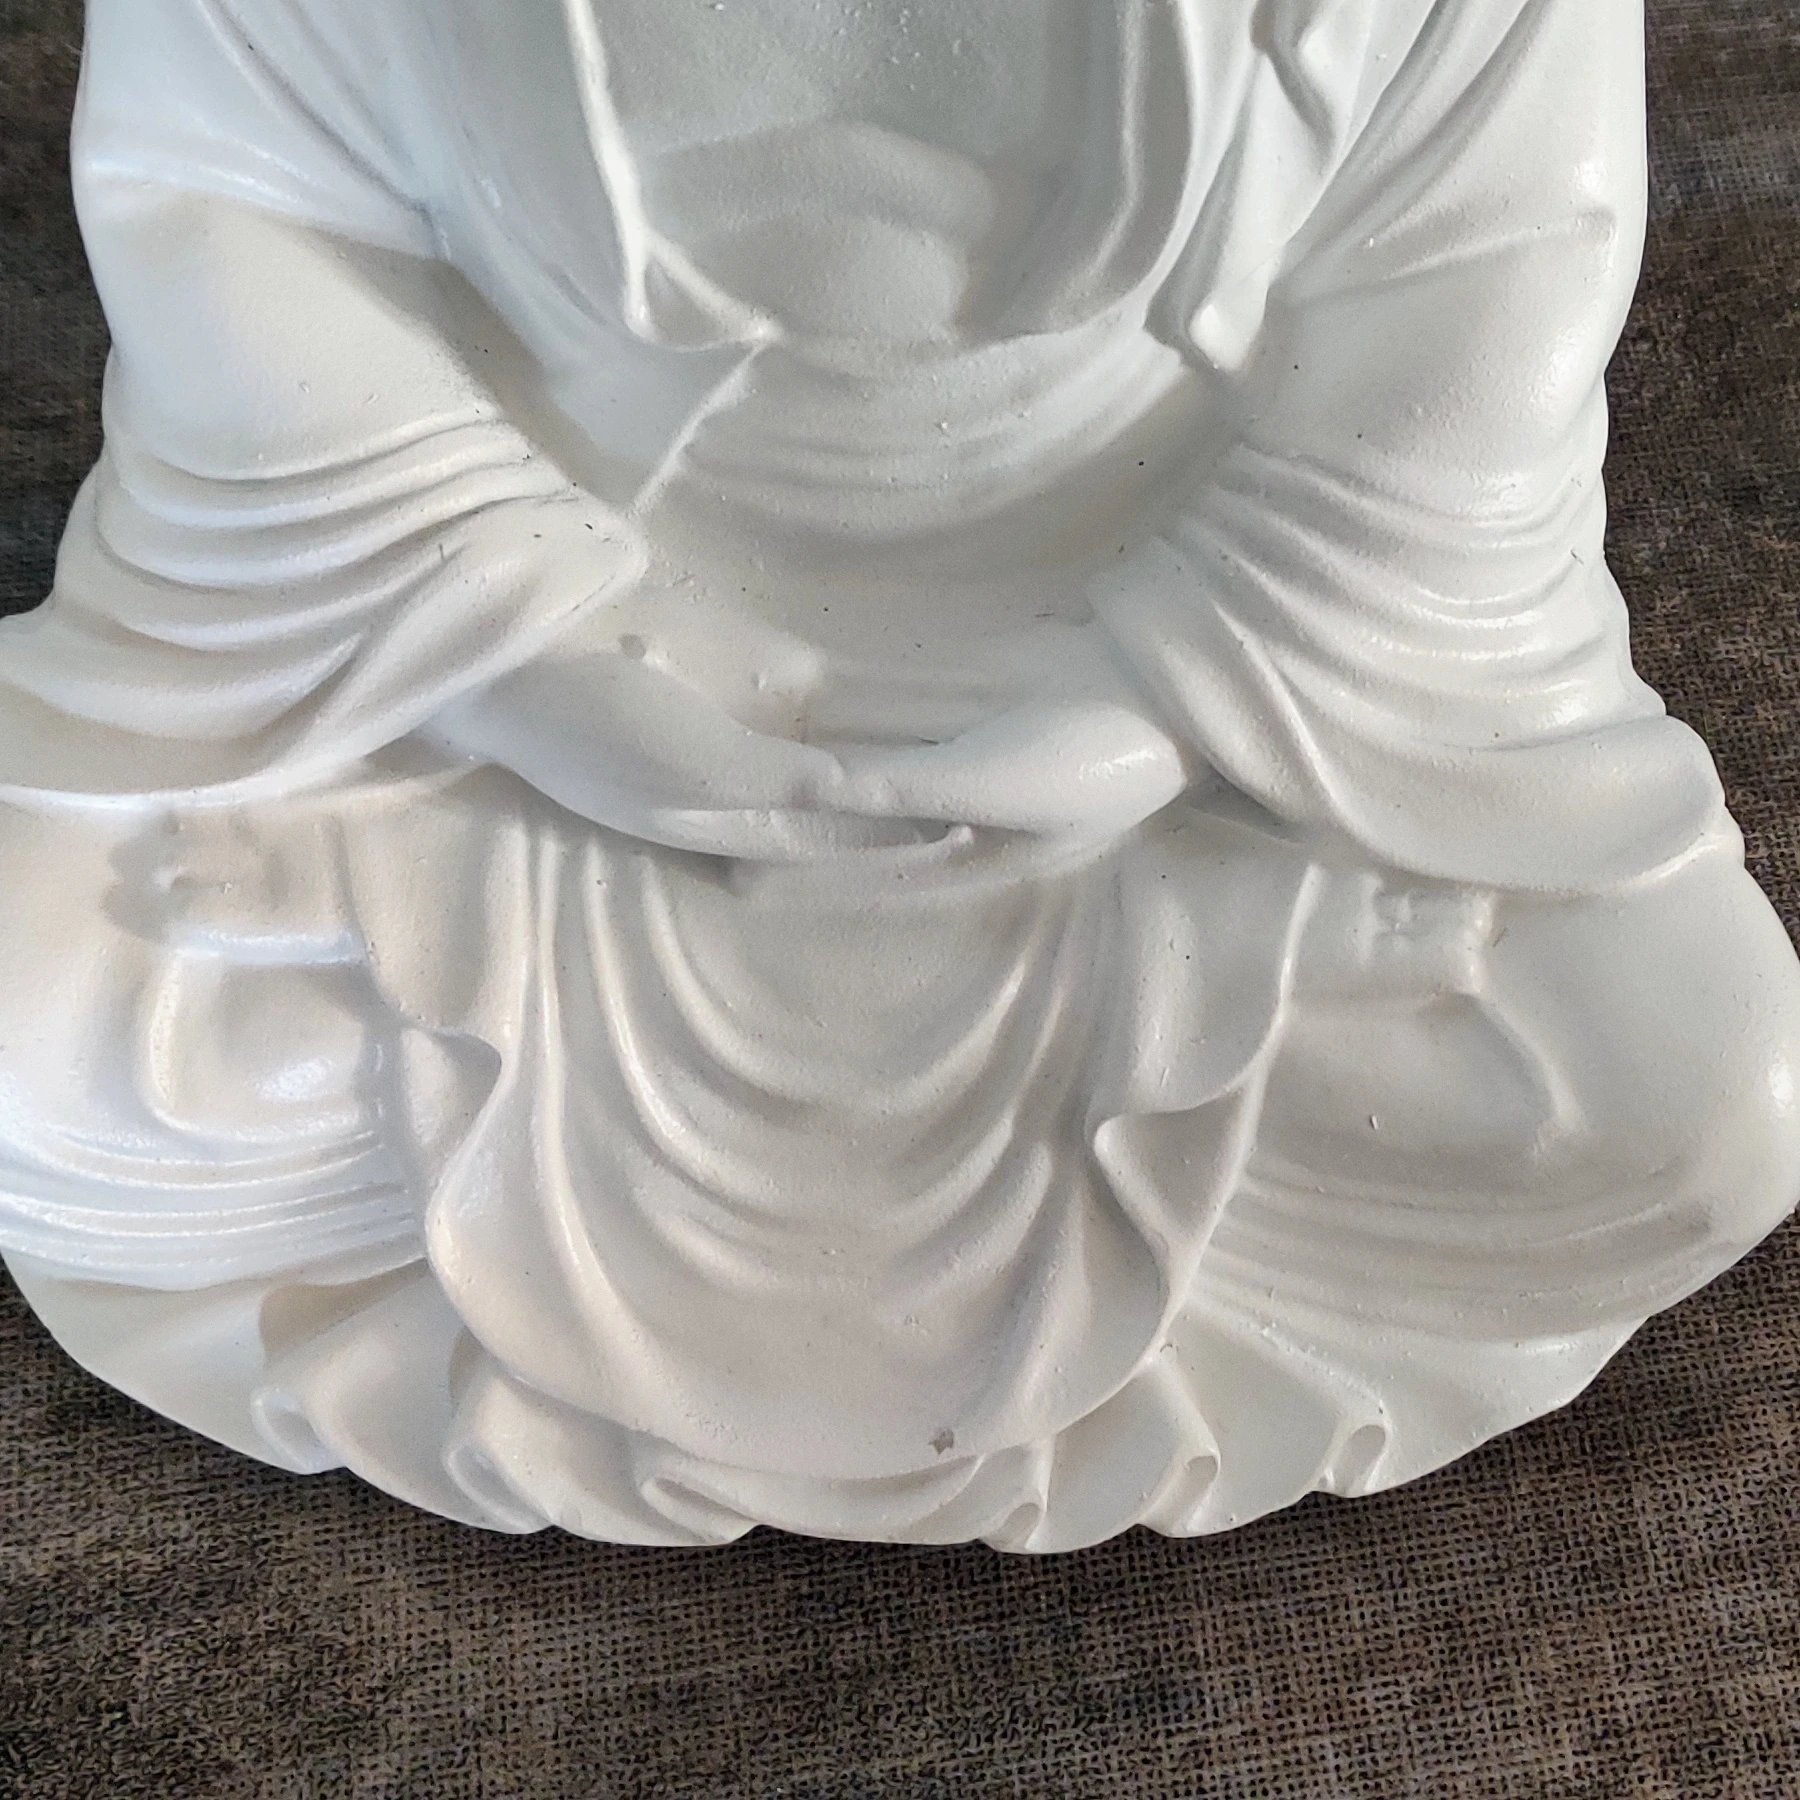 
Zen Style White Resin Sitting Buddha Statues Home Decor 